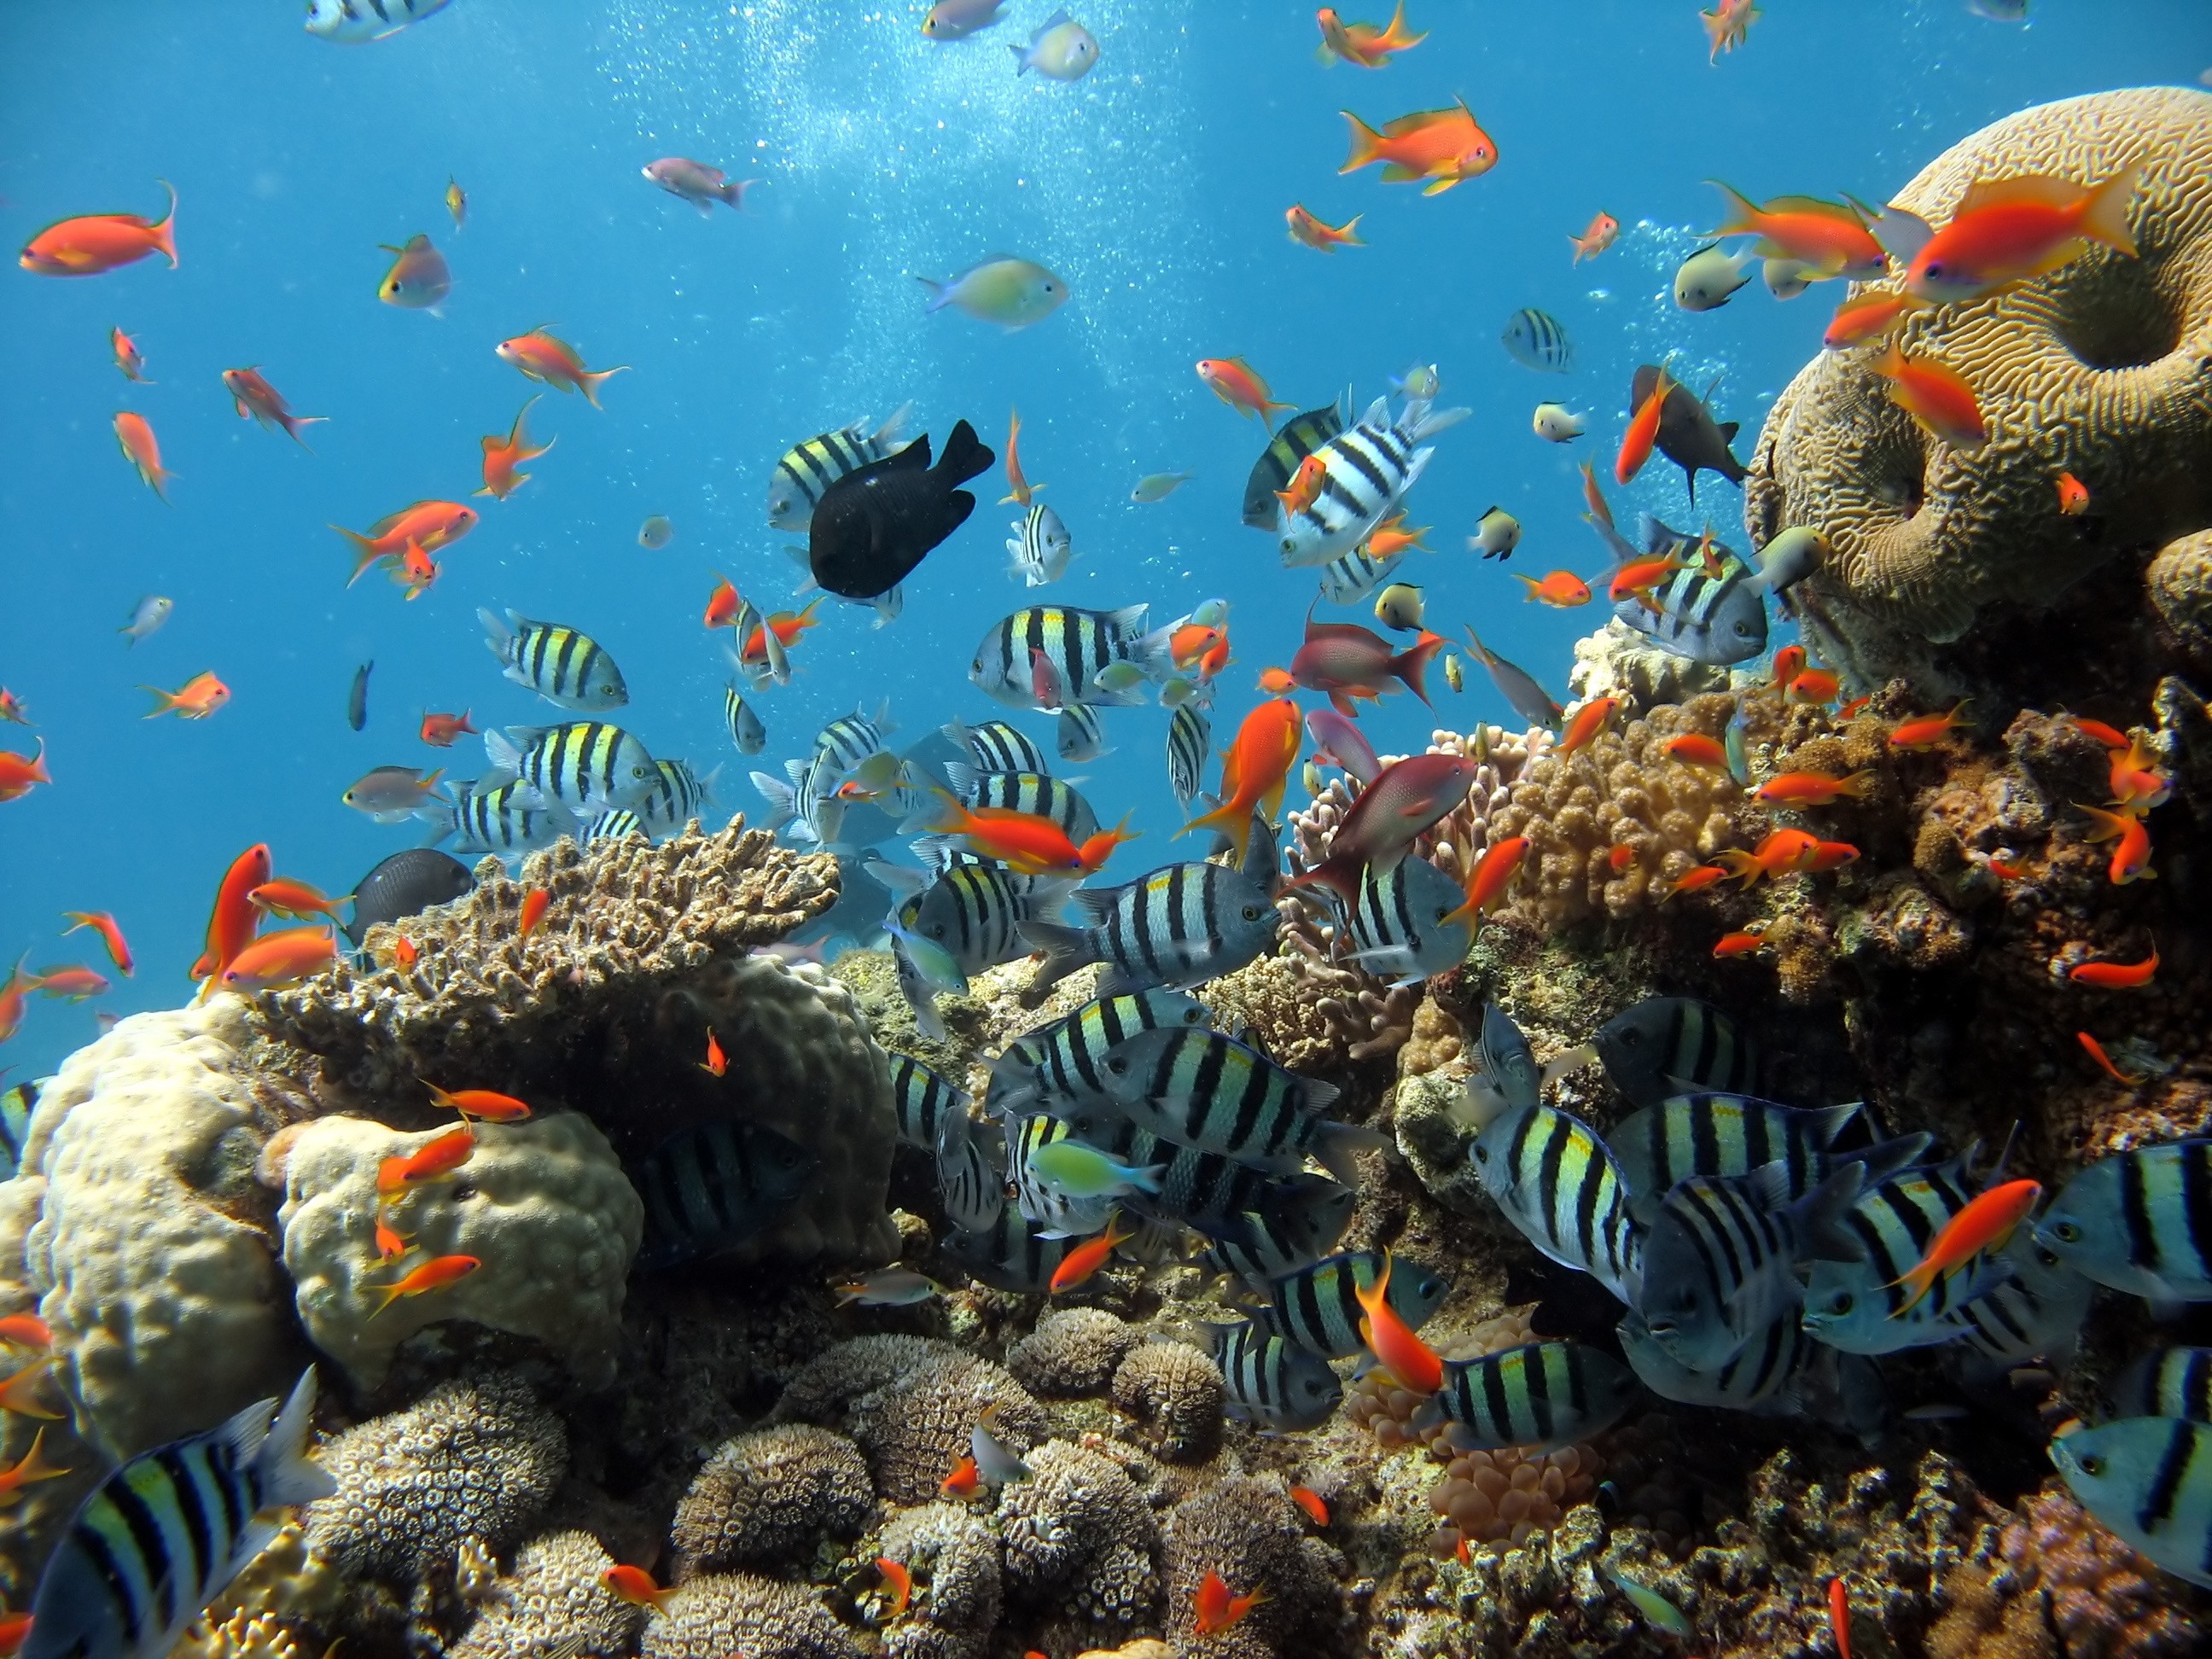 General 2592x1944 fish underwater tropical fish sea life animals coral